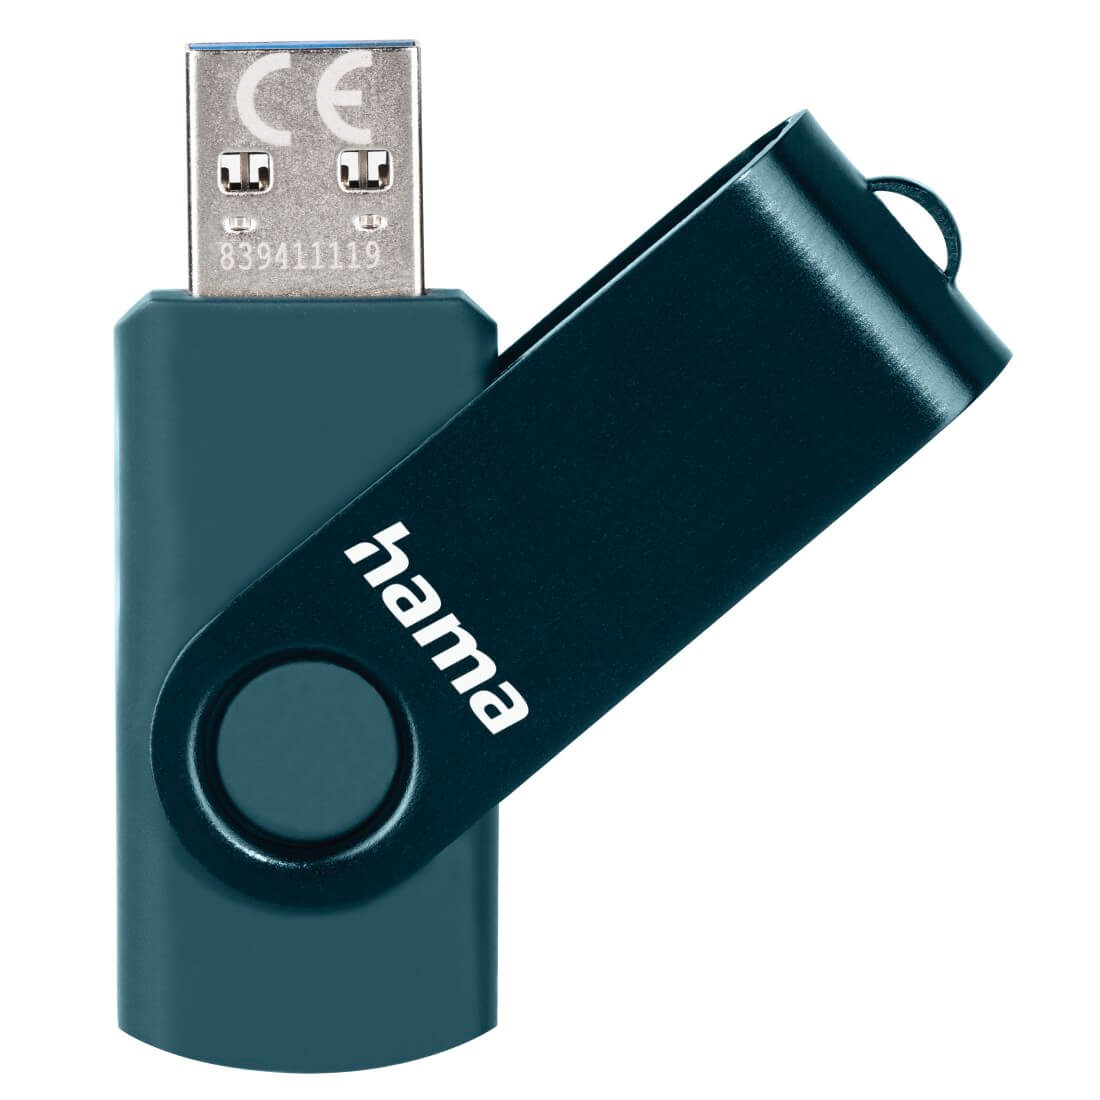 Hama USB-Stick Rotate, USB 3.0, 256GB, 90MB/s